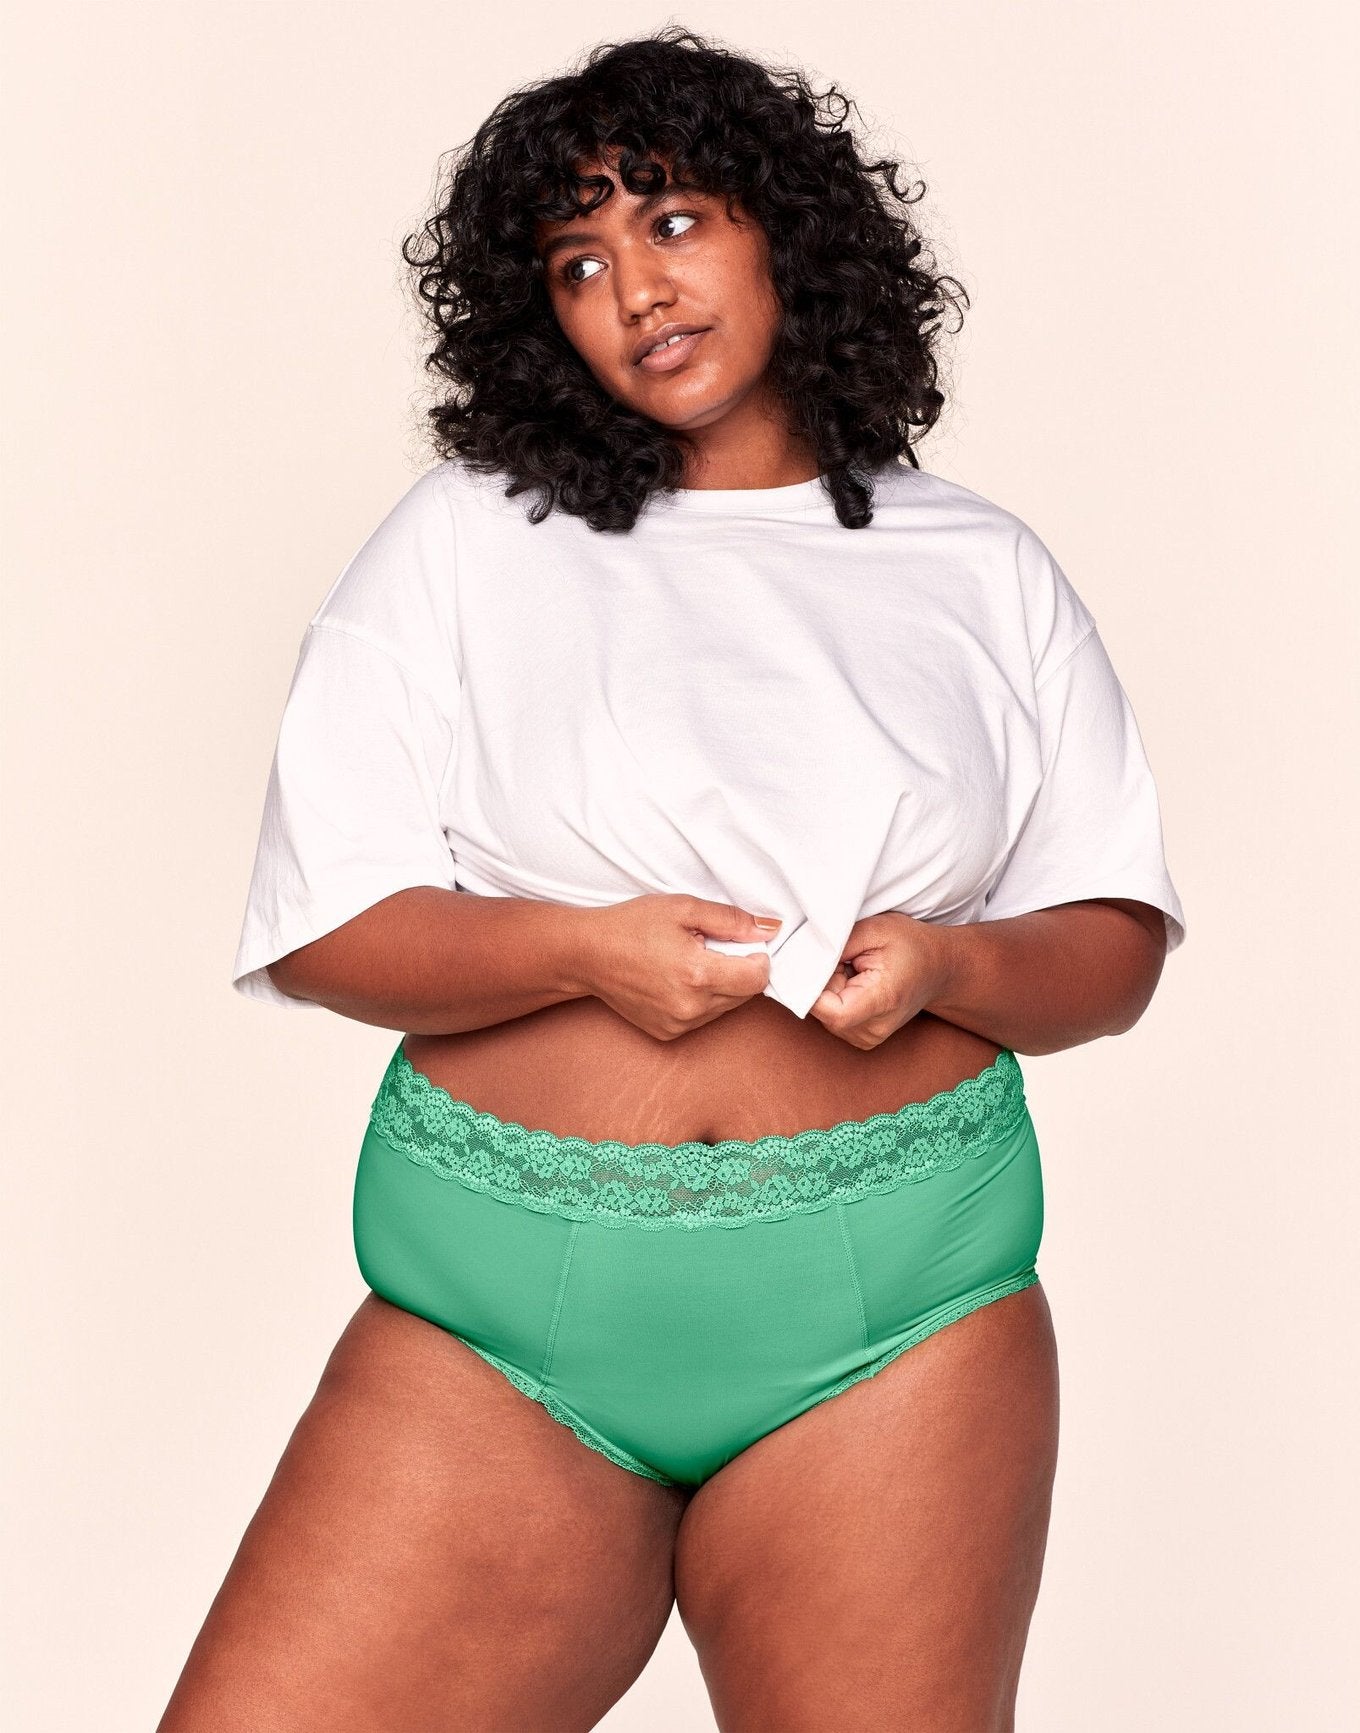 Joyja Amelia period-proof panty in color Jade Cream and shape high waisted